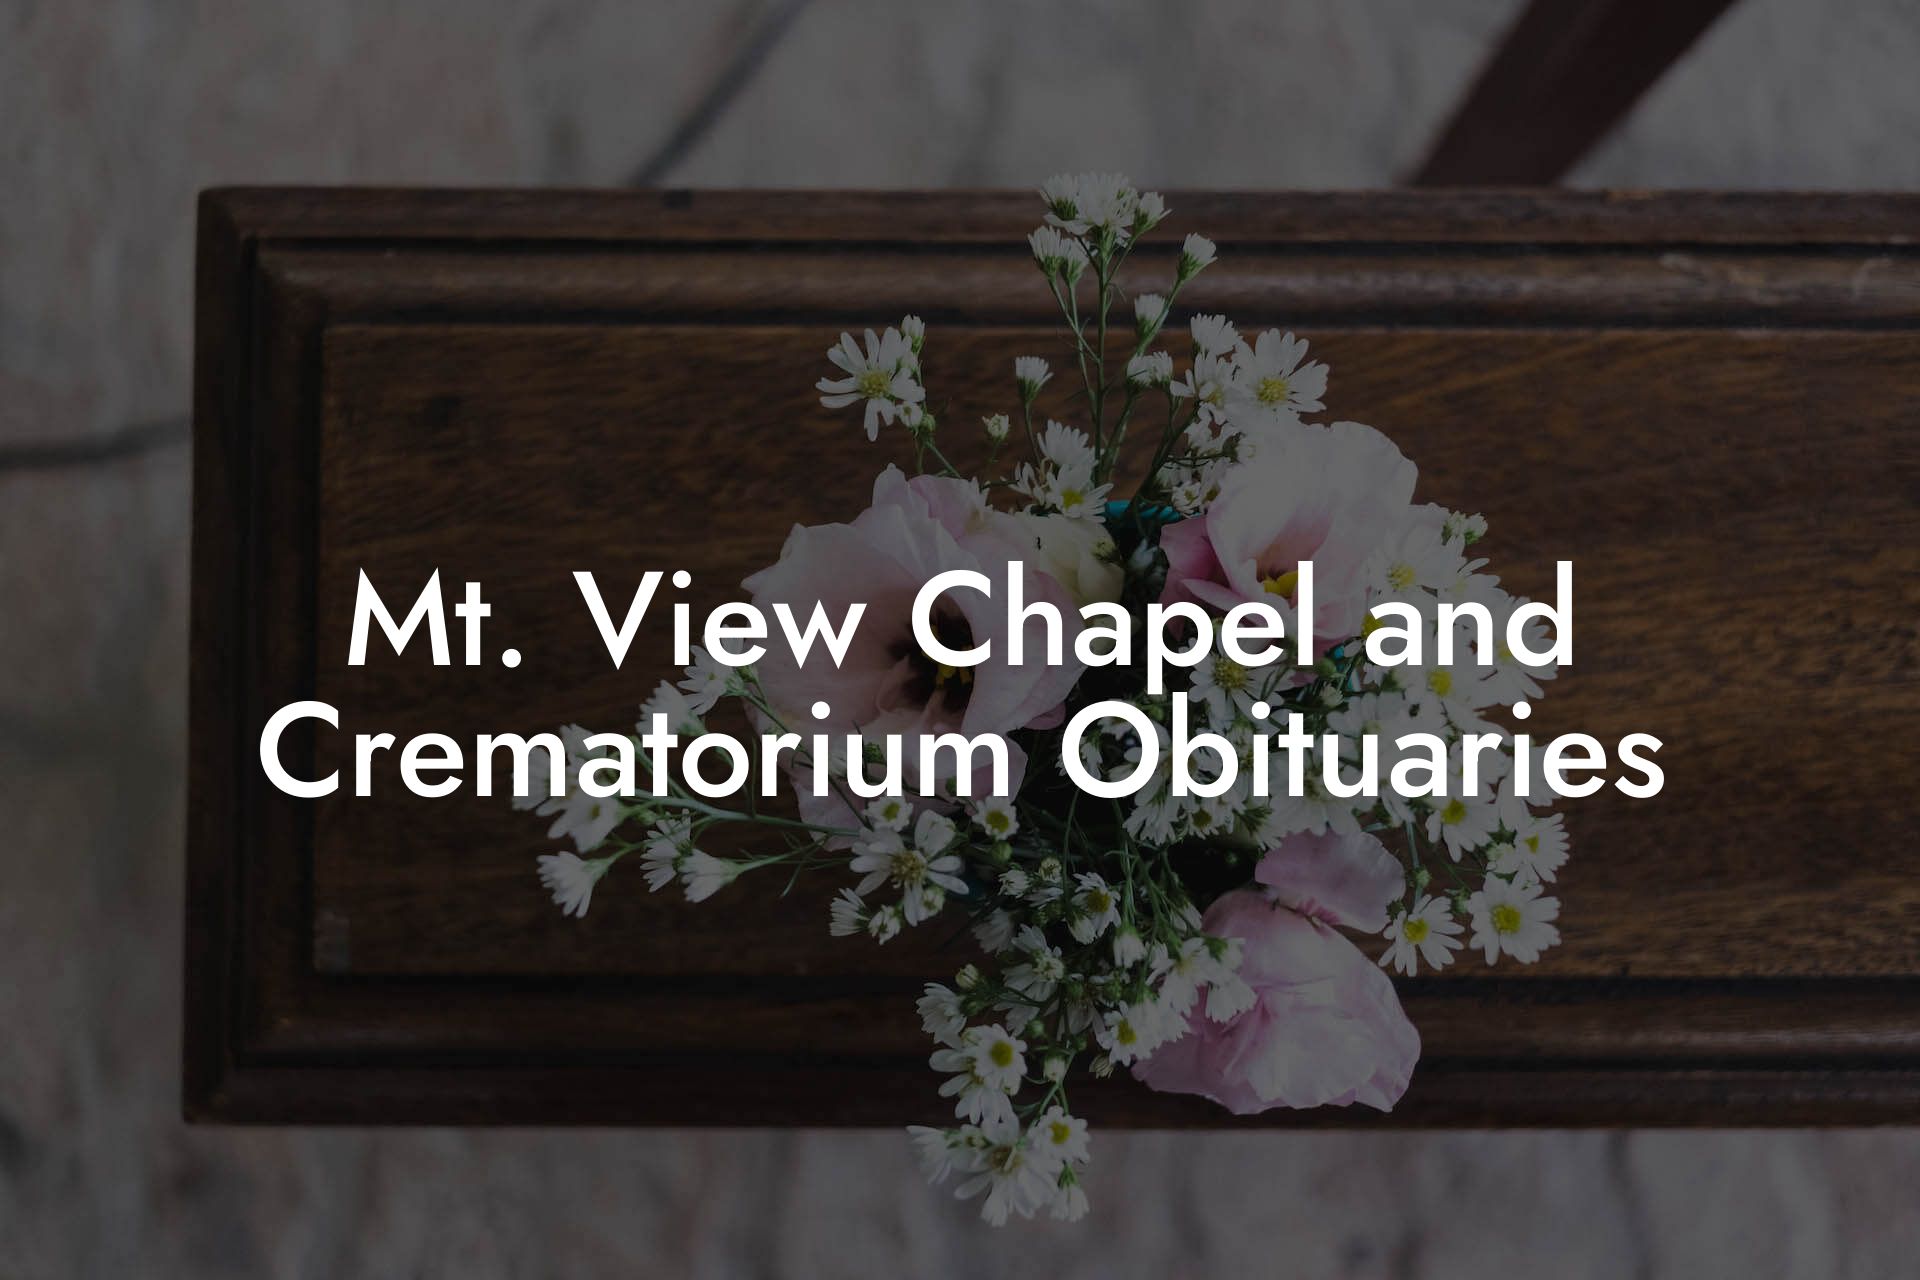 Mt. View Chapel and Crematorium Obituaries